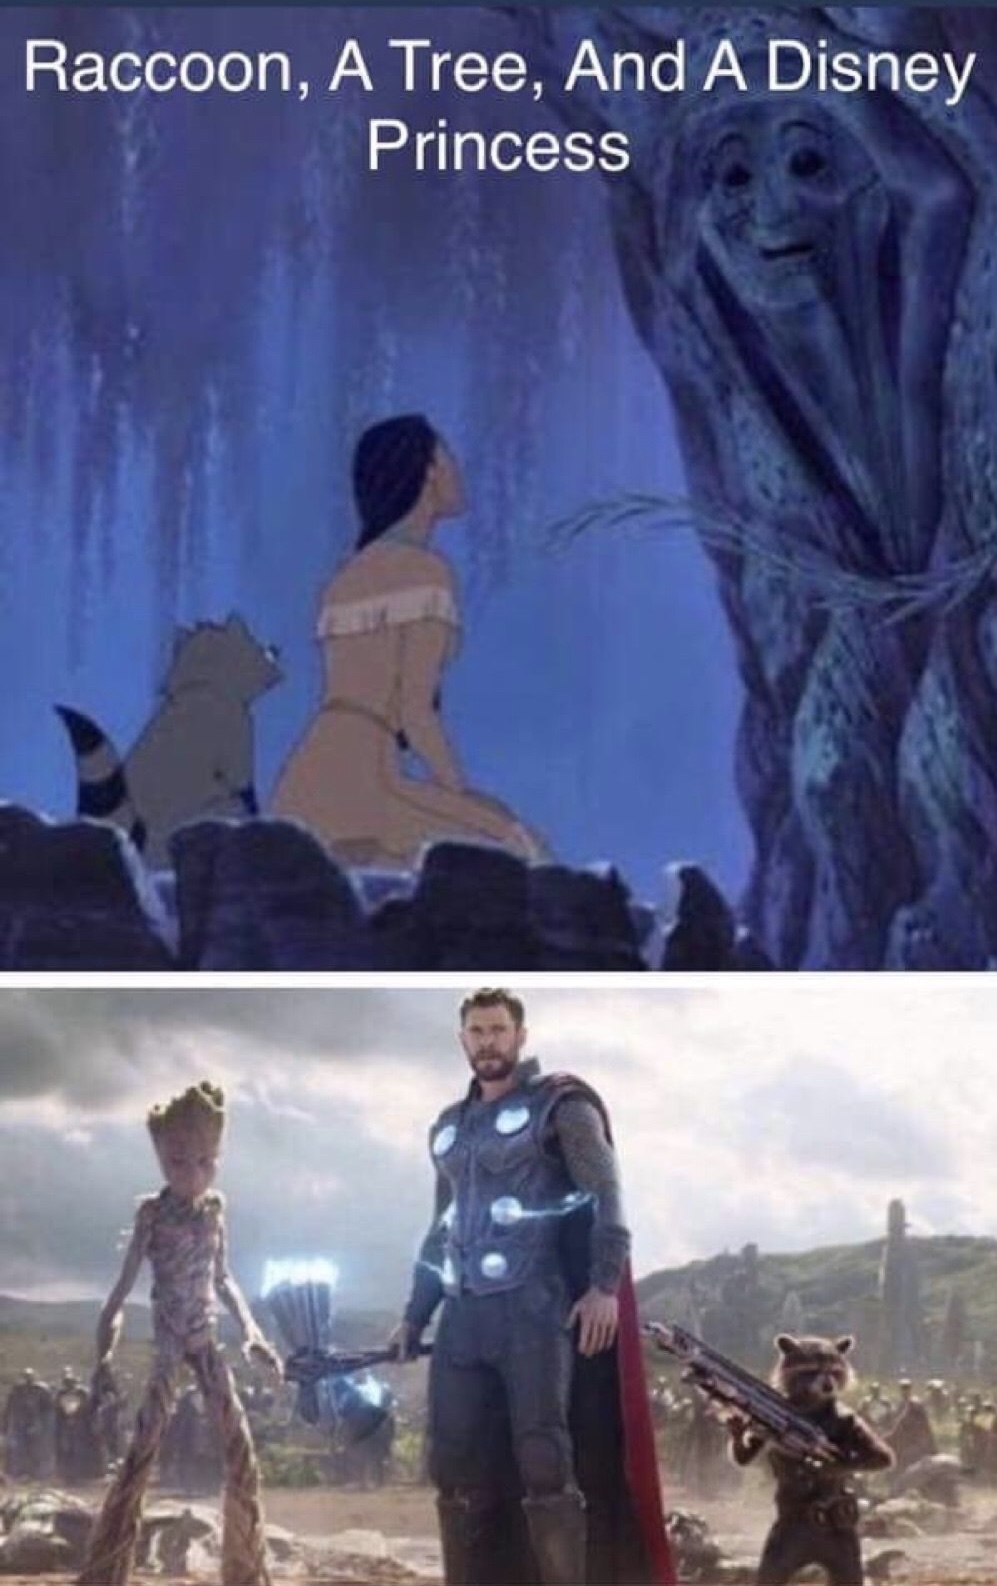 memes - avengers meme princess - Raccoon, A Tree, And A Disney Princess